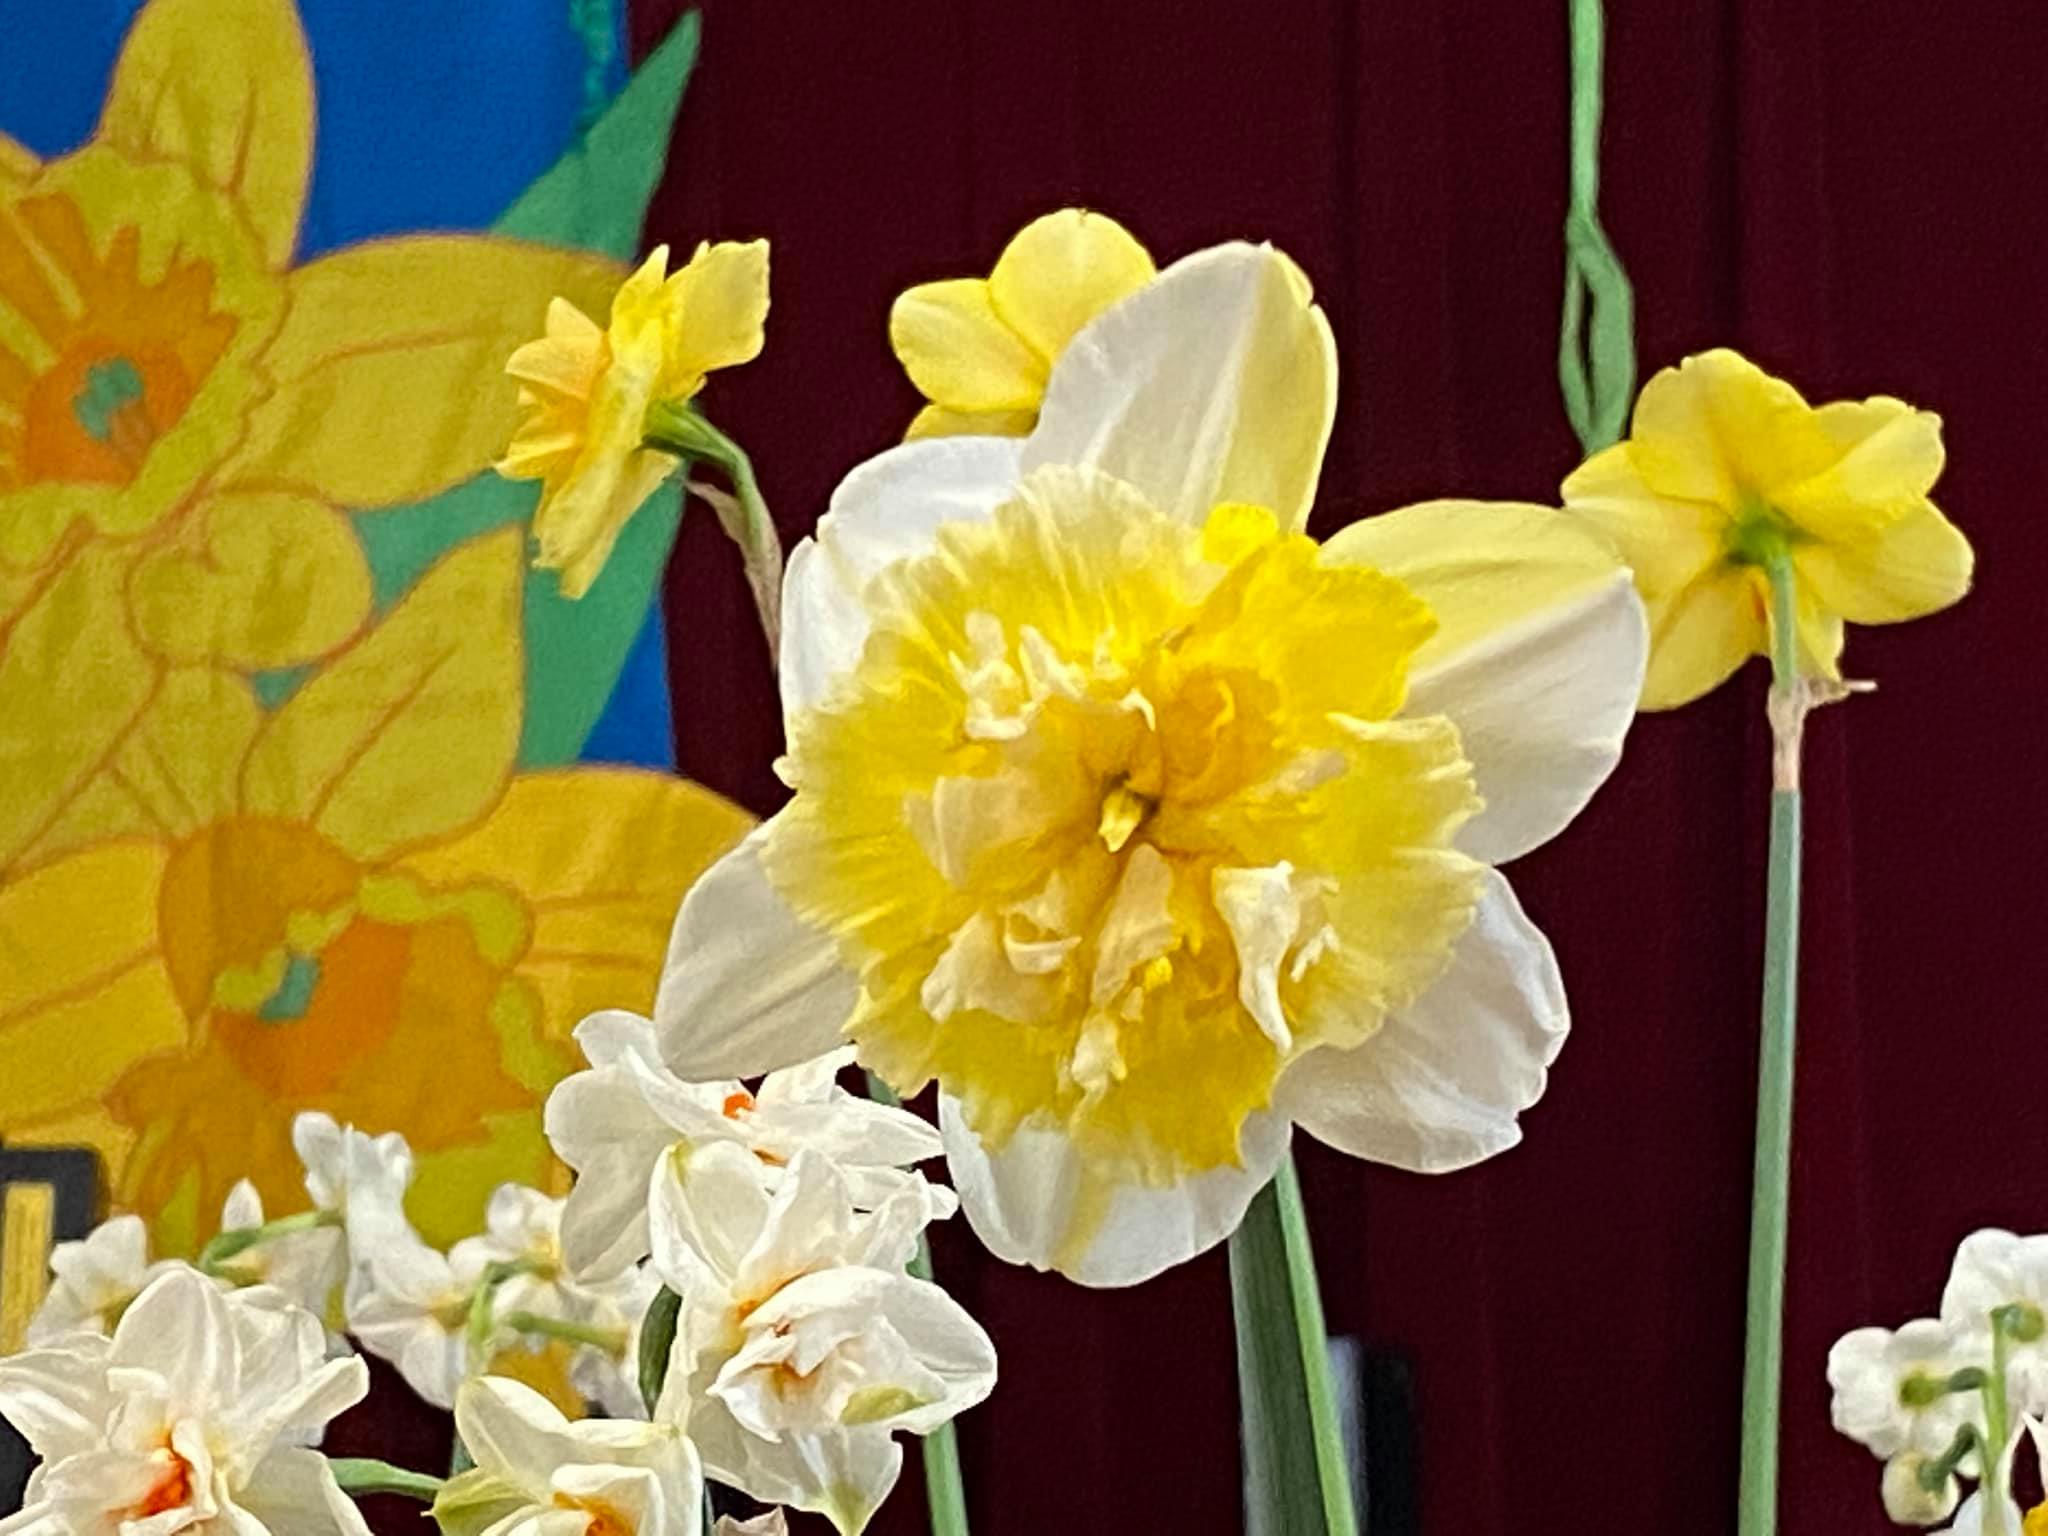 Daffodils from the Julian Daffodil Show